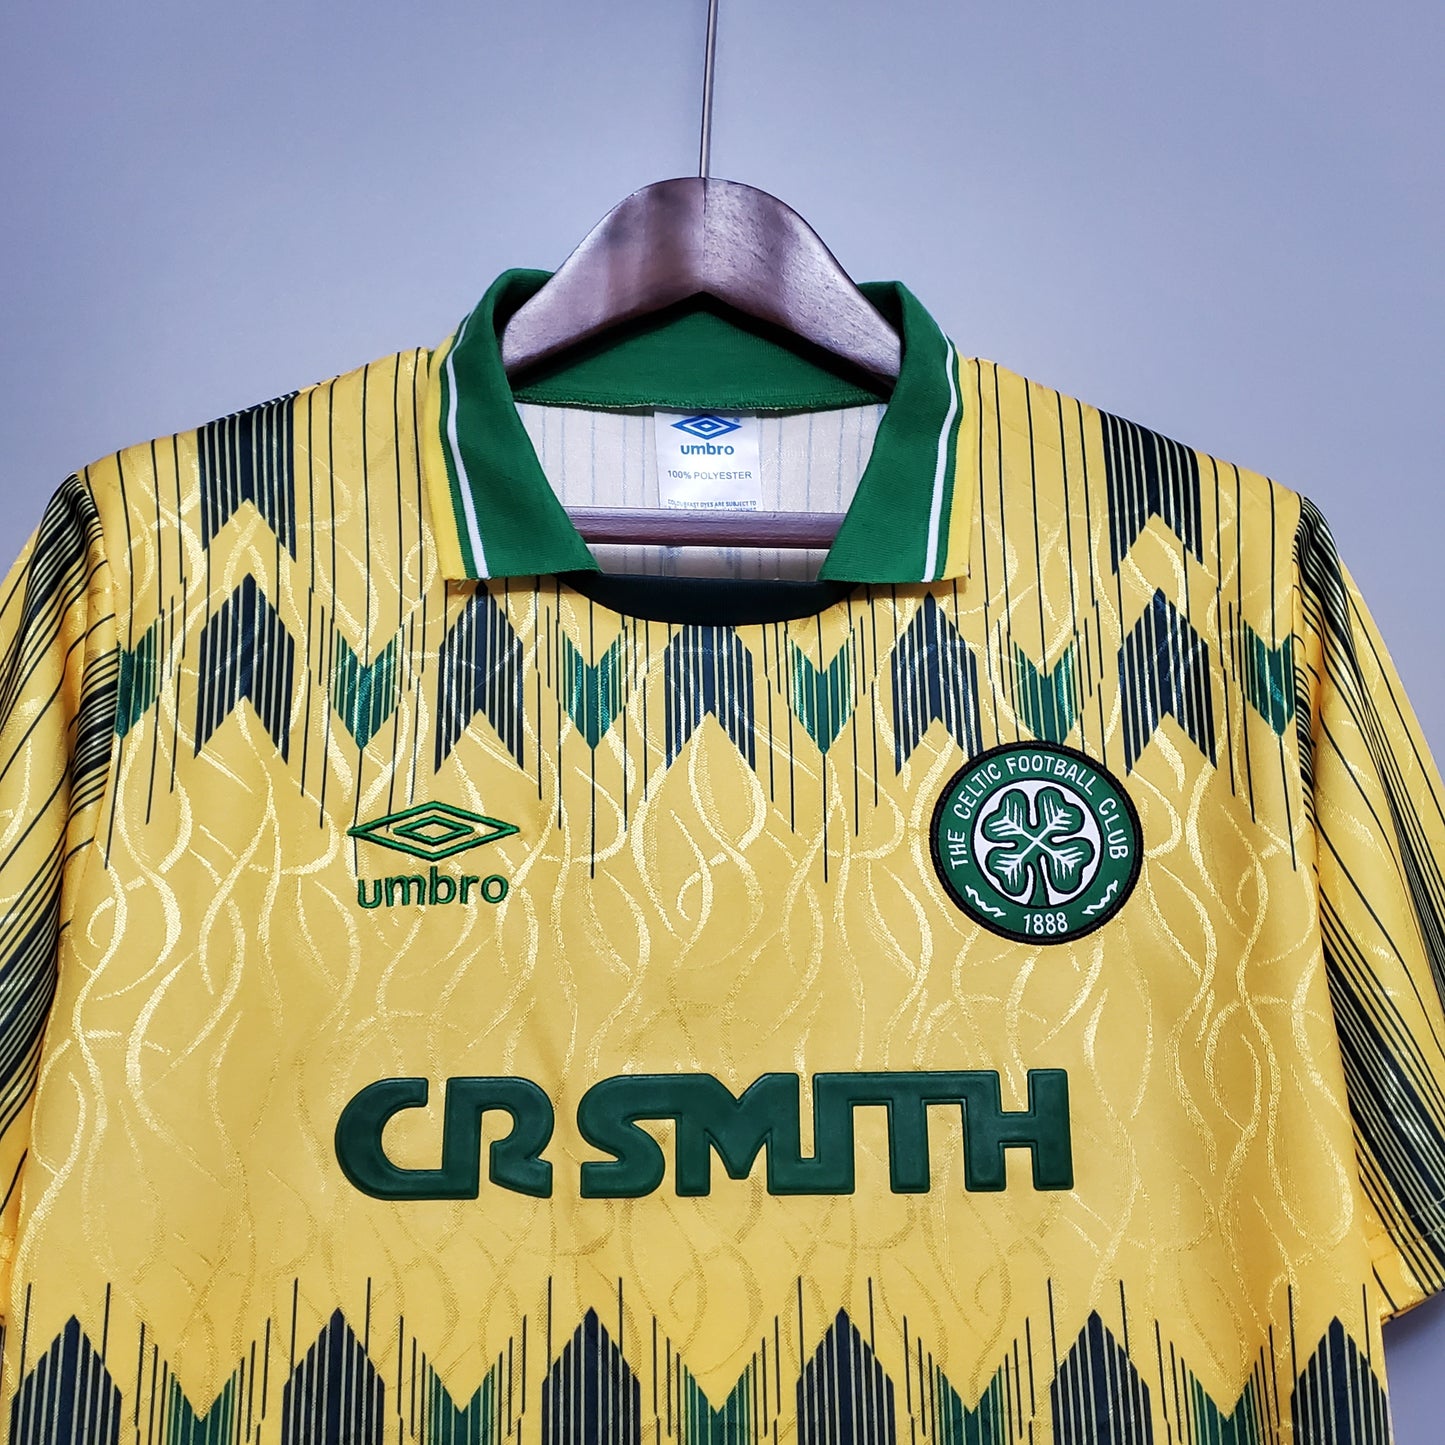 1991/92 Celtic Away Shirt